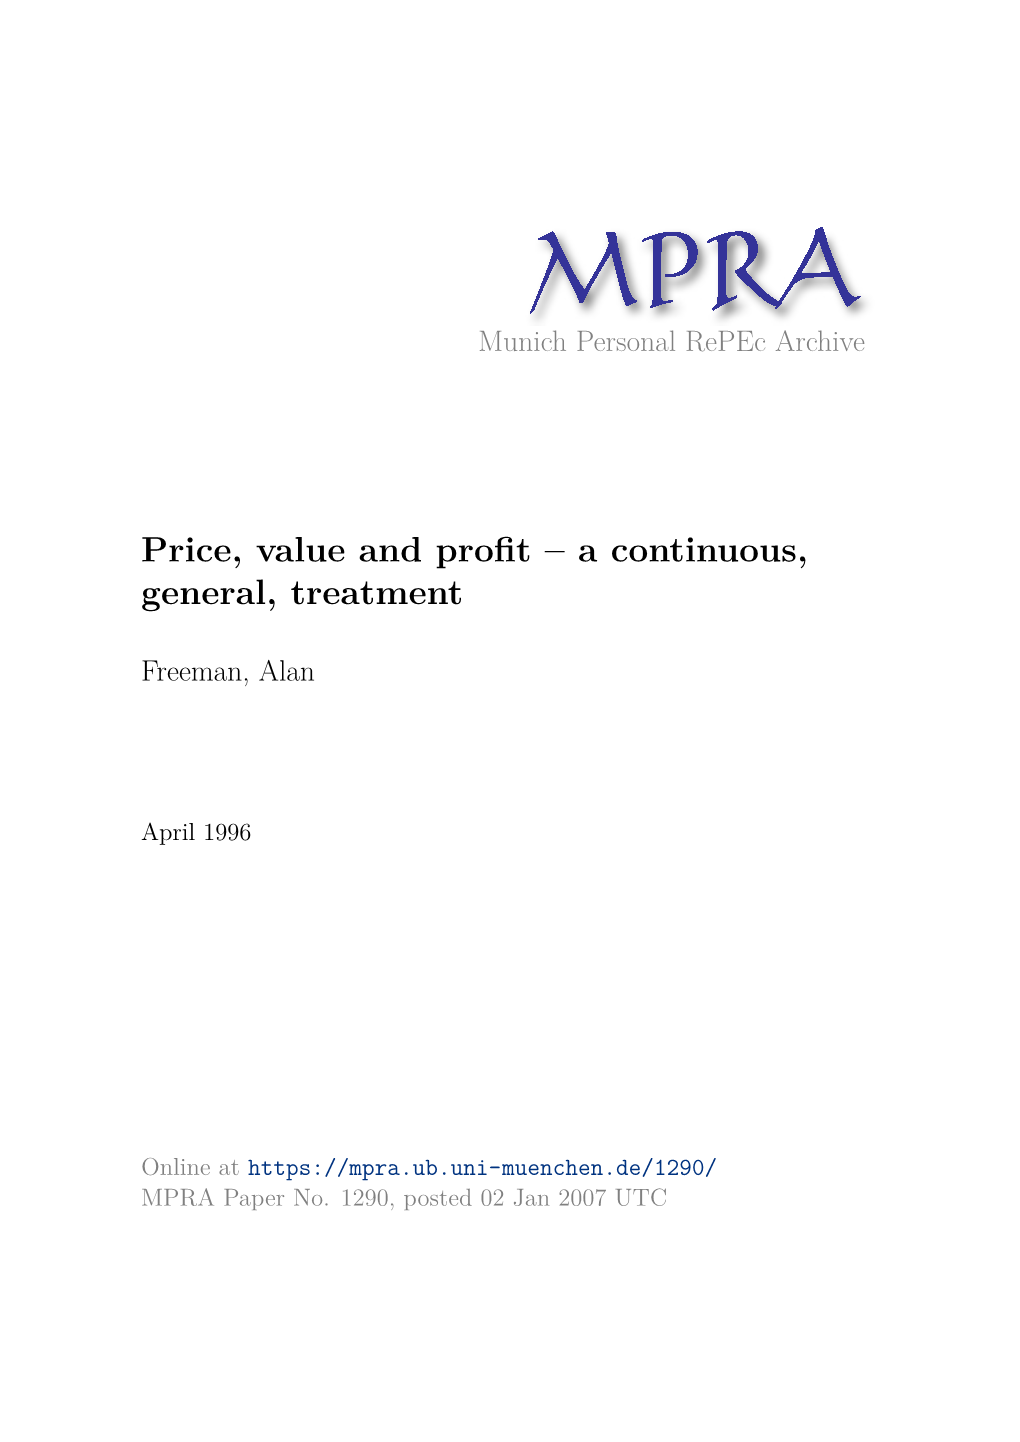 Price, Value, and Profit